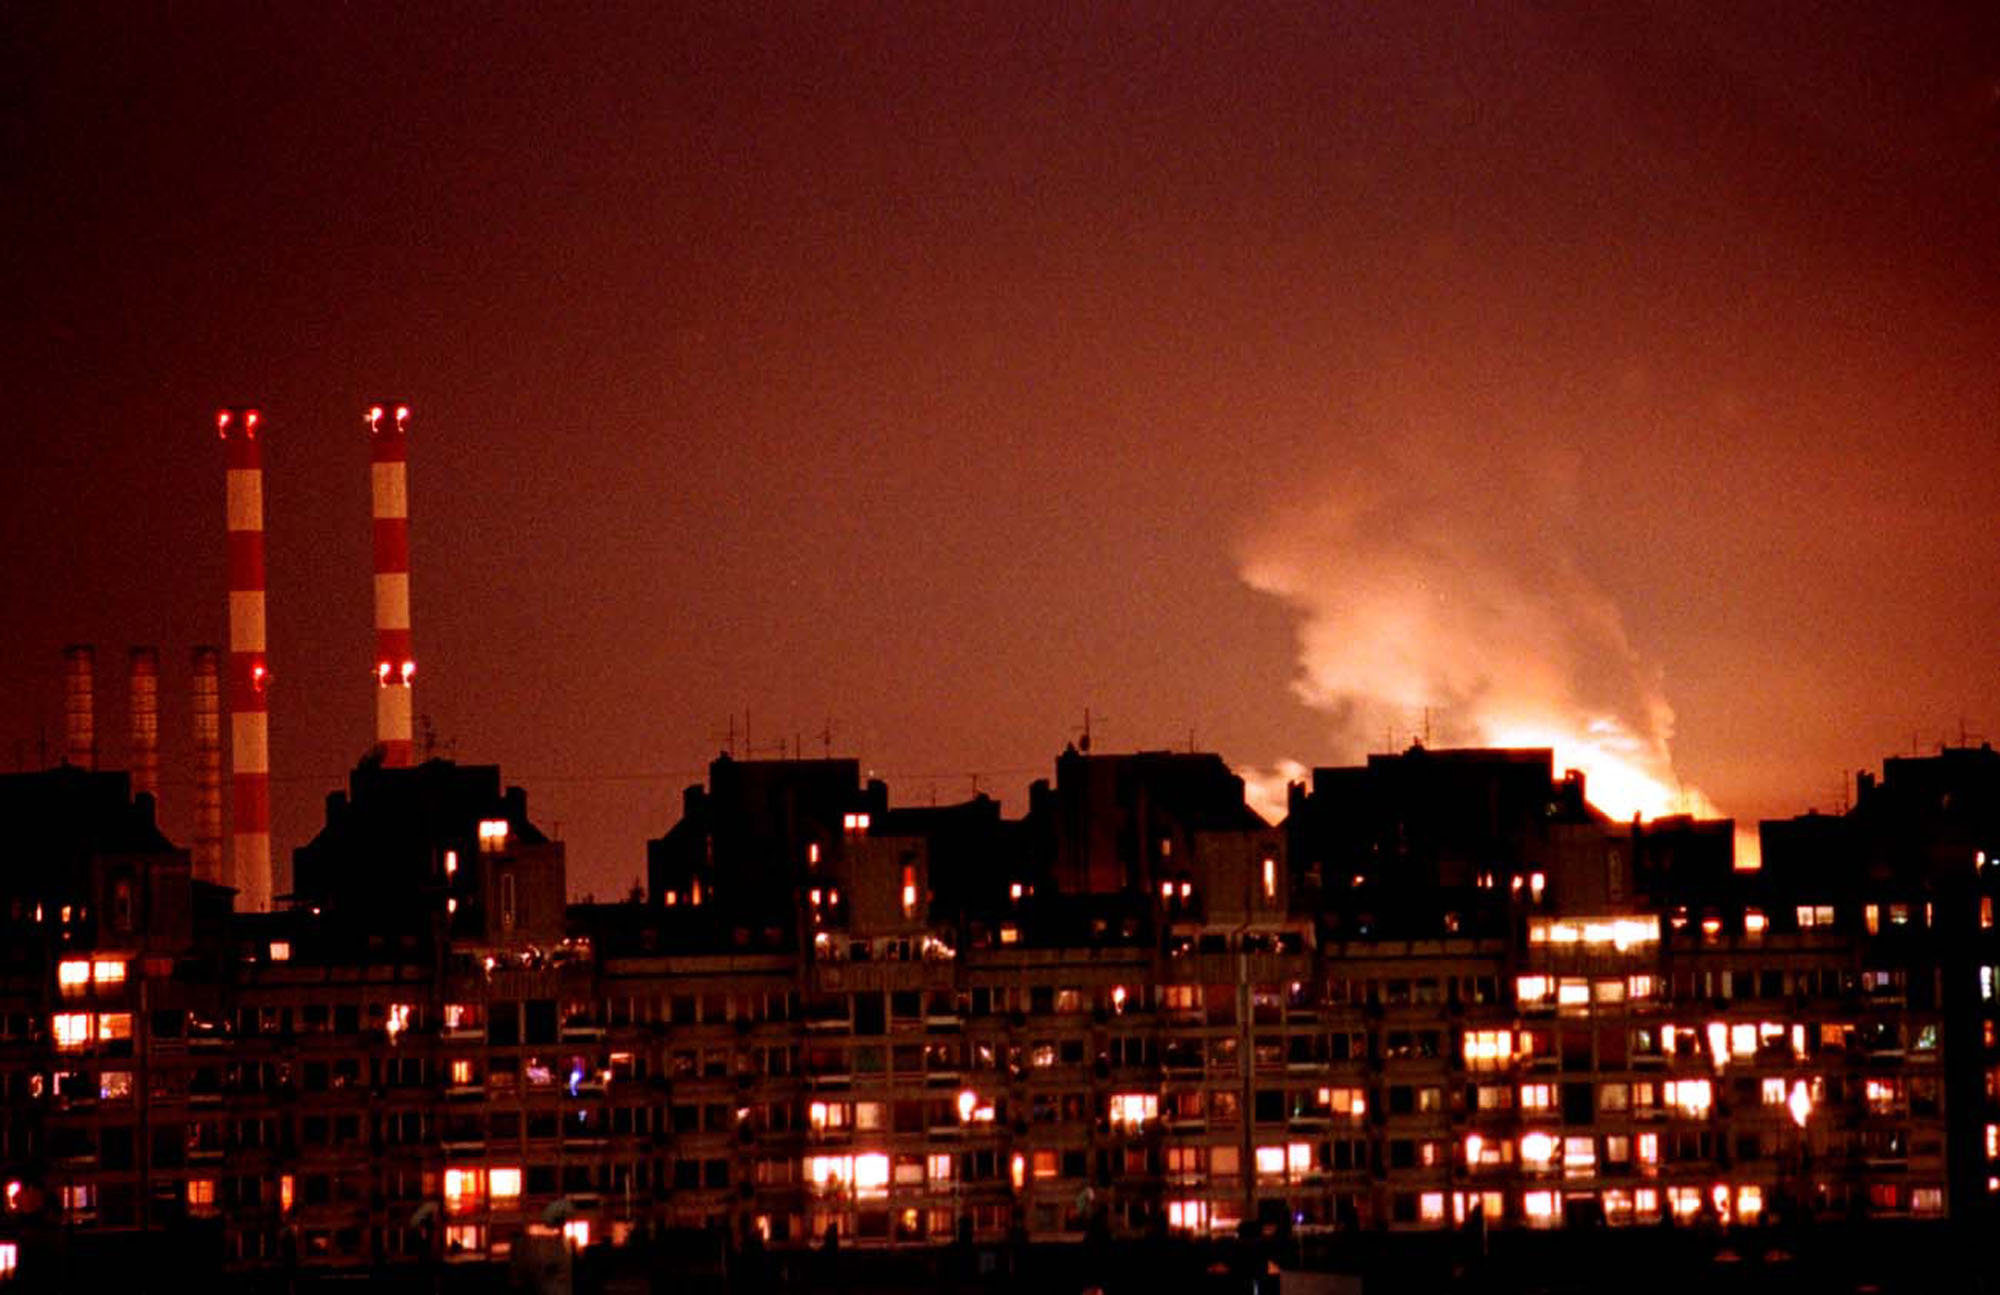 Flames from an explosion light up the Belgrade skyline